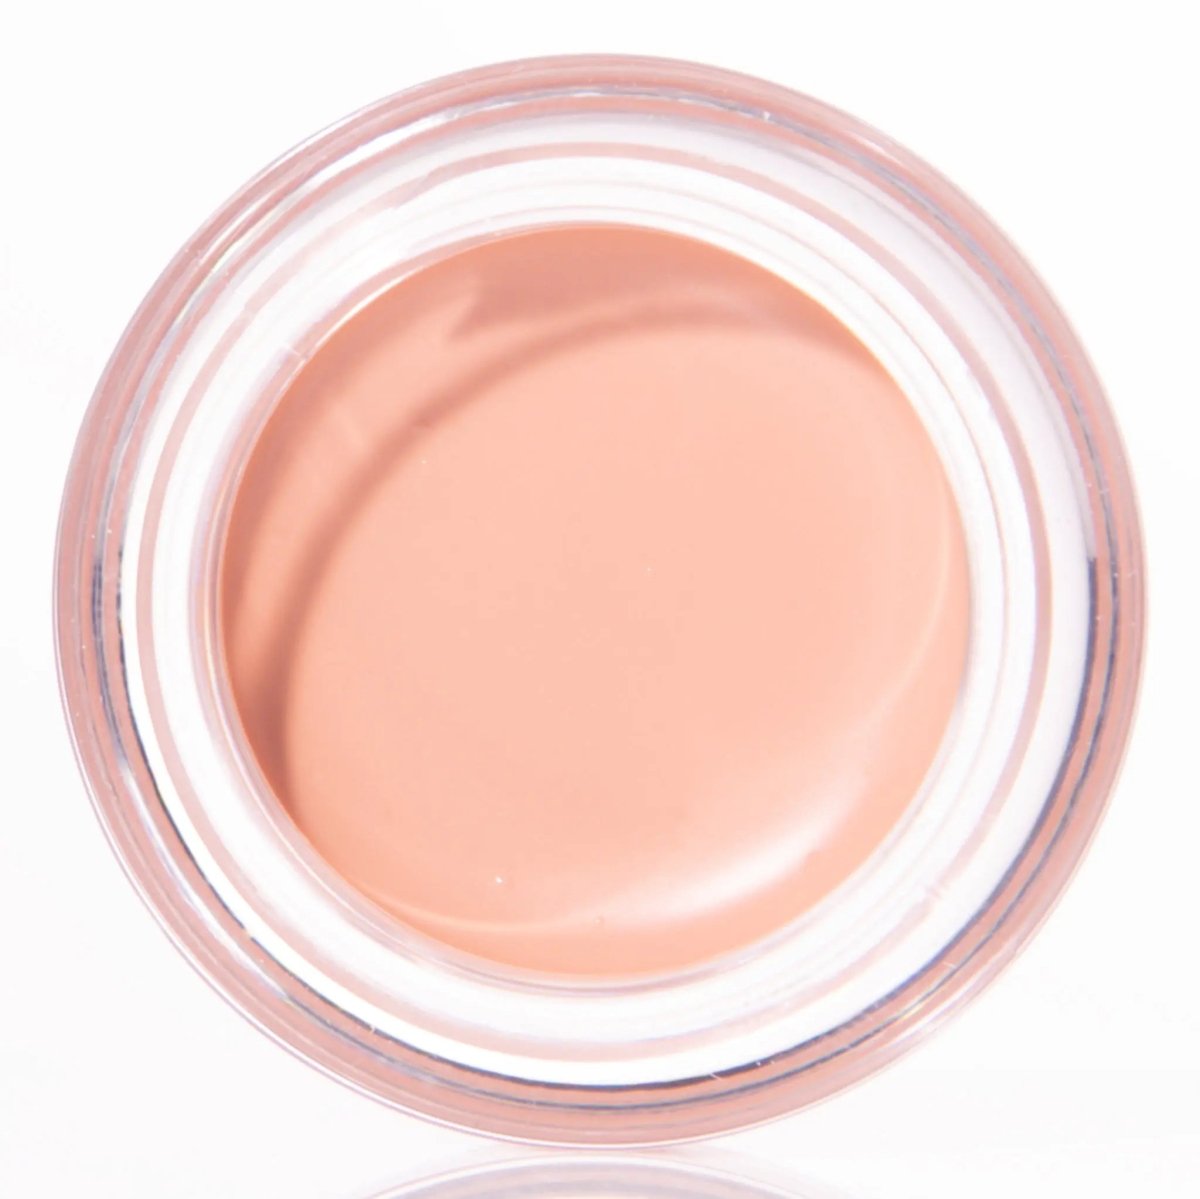 Image of NYX Professional Makeup Dark Circle Concealer